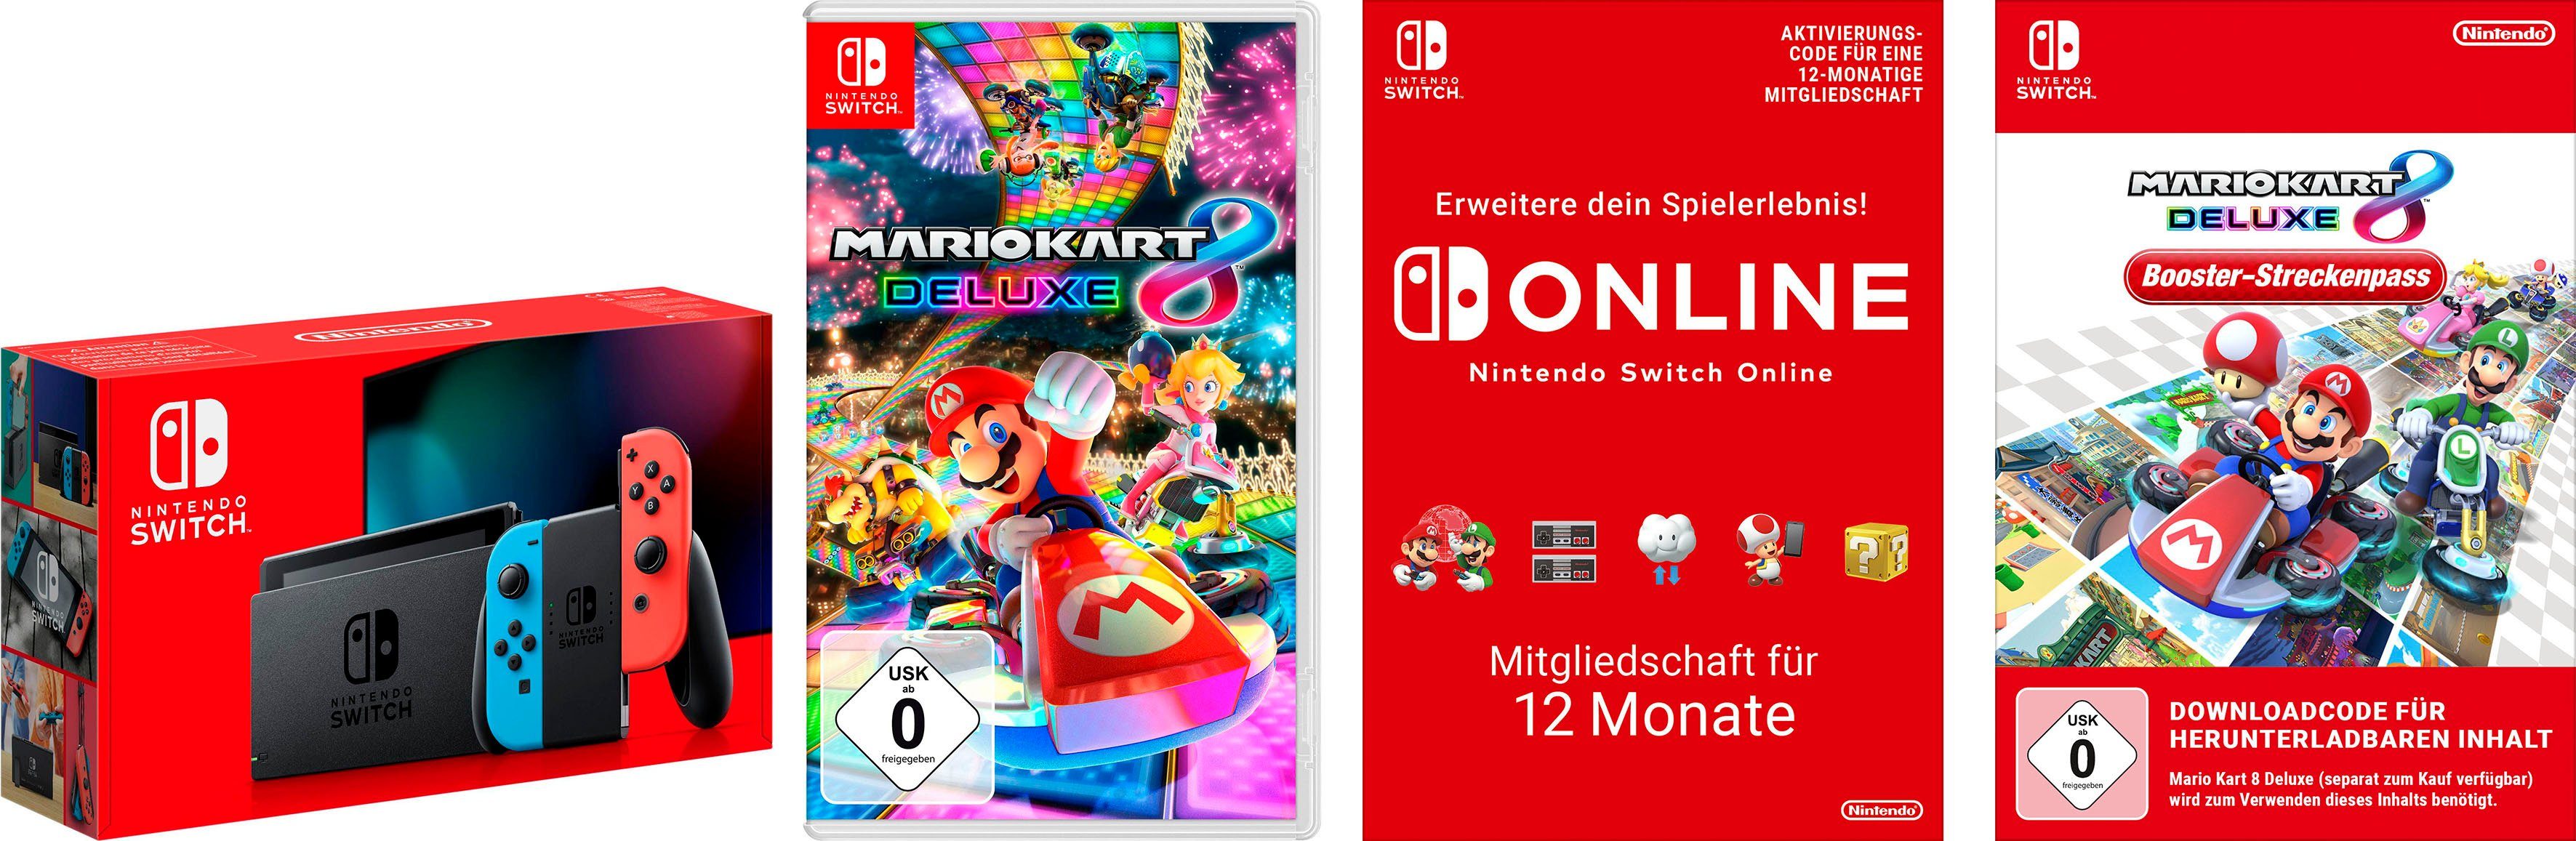 Nintendo Switch, inkl. Mario Kart 8 + Boosters + Nintendo Switch Online  Mitgliedschaft